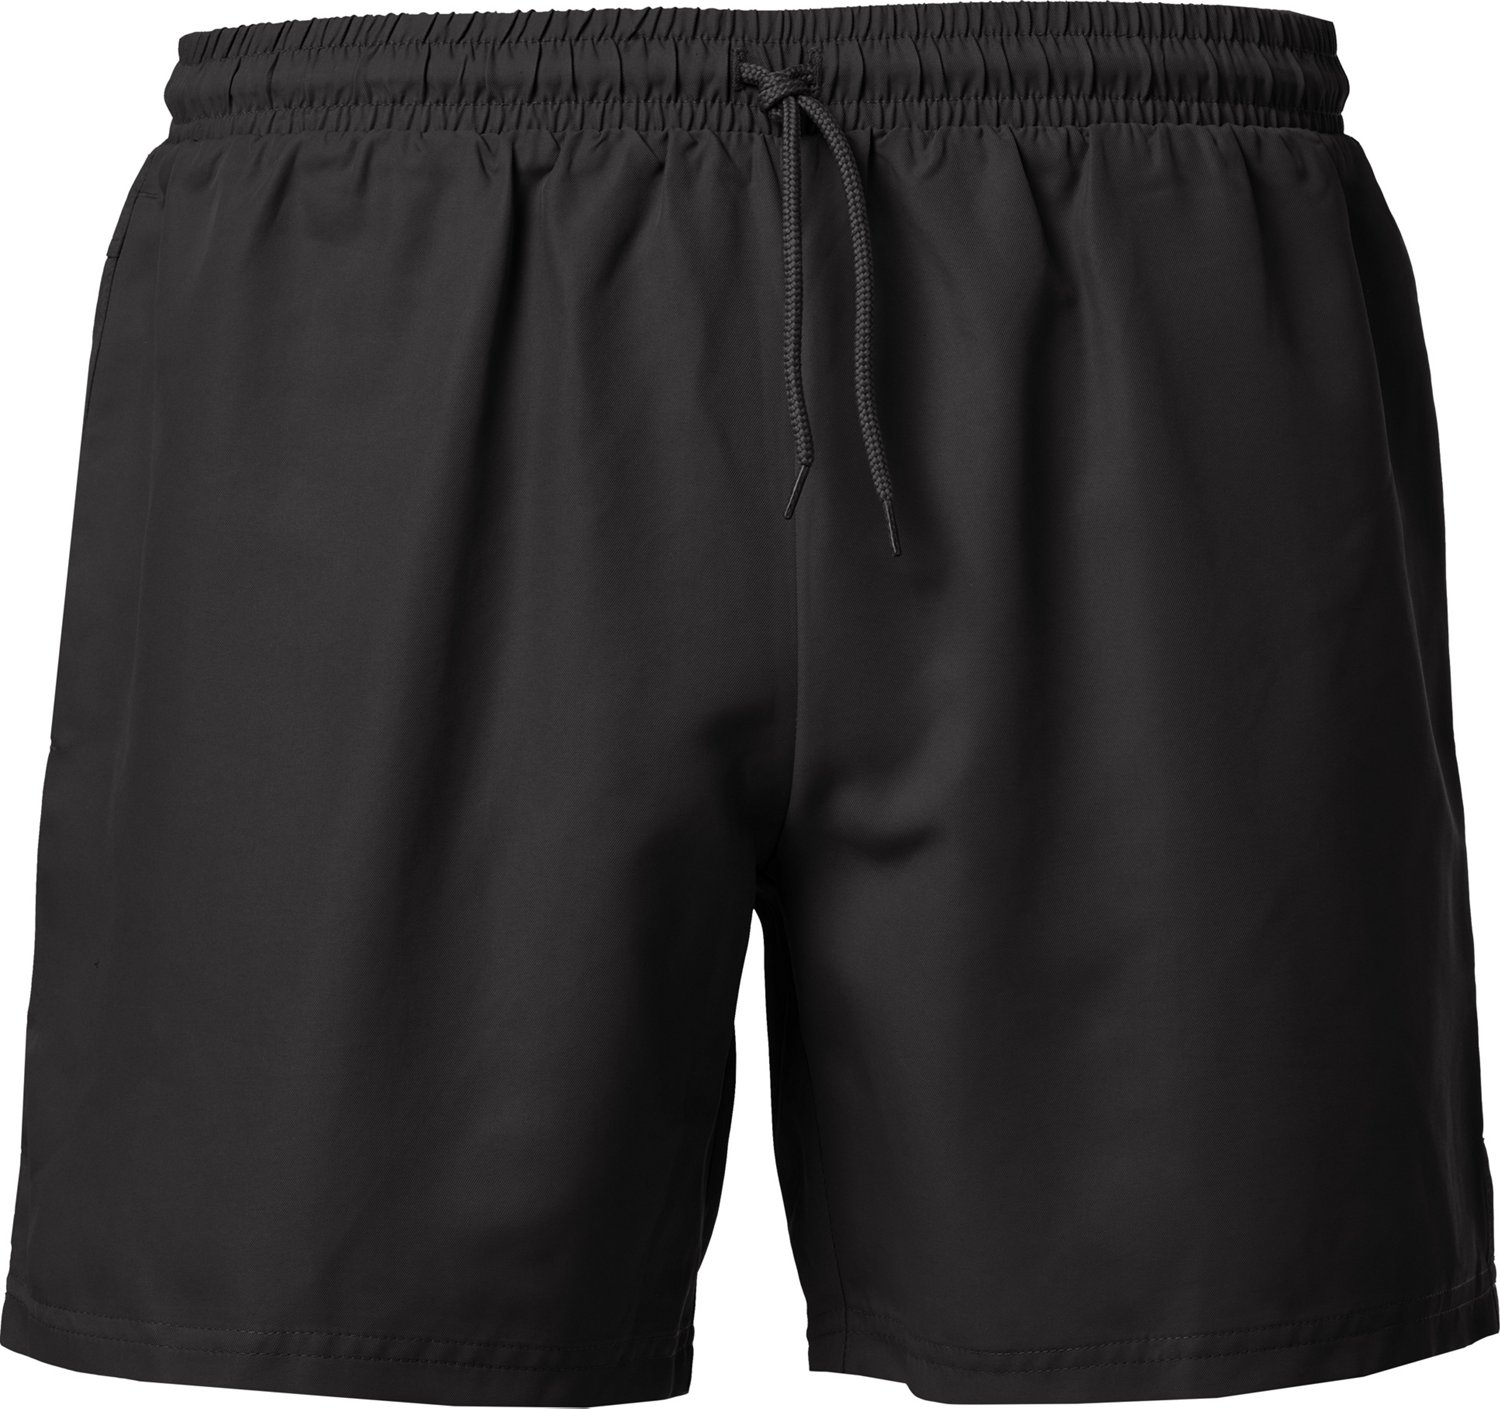 Glacier Bay Active Shorts for Men